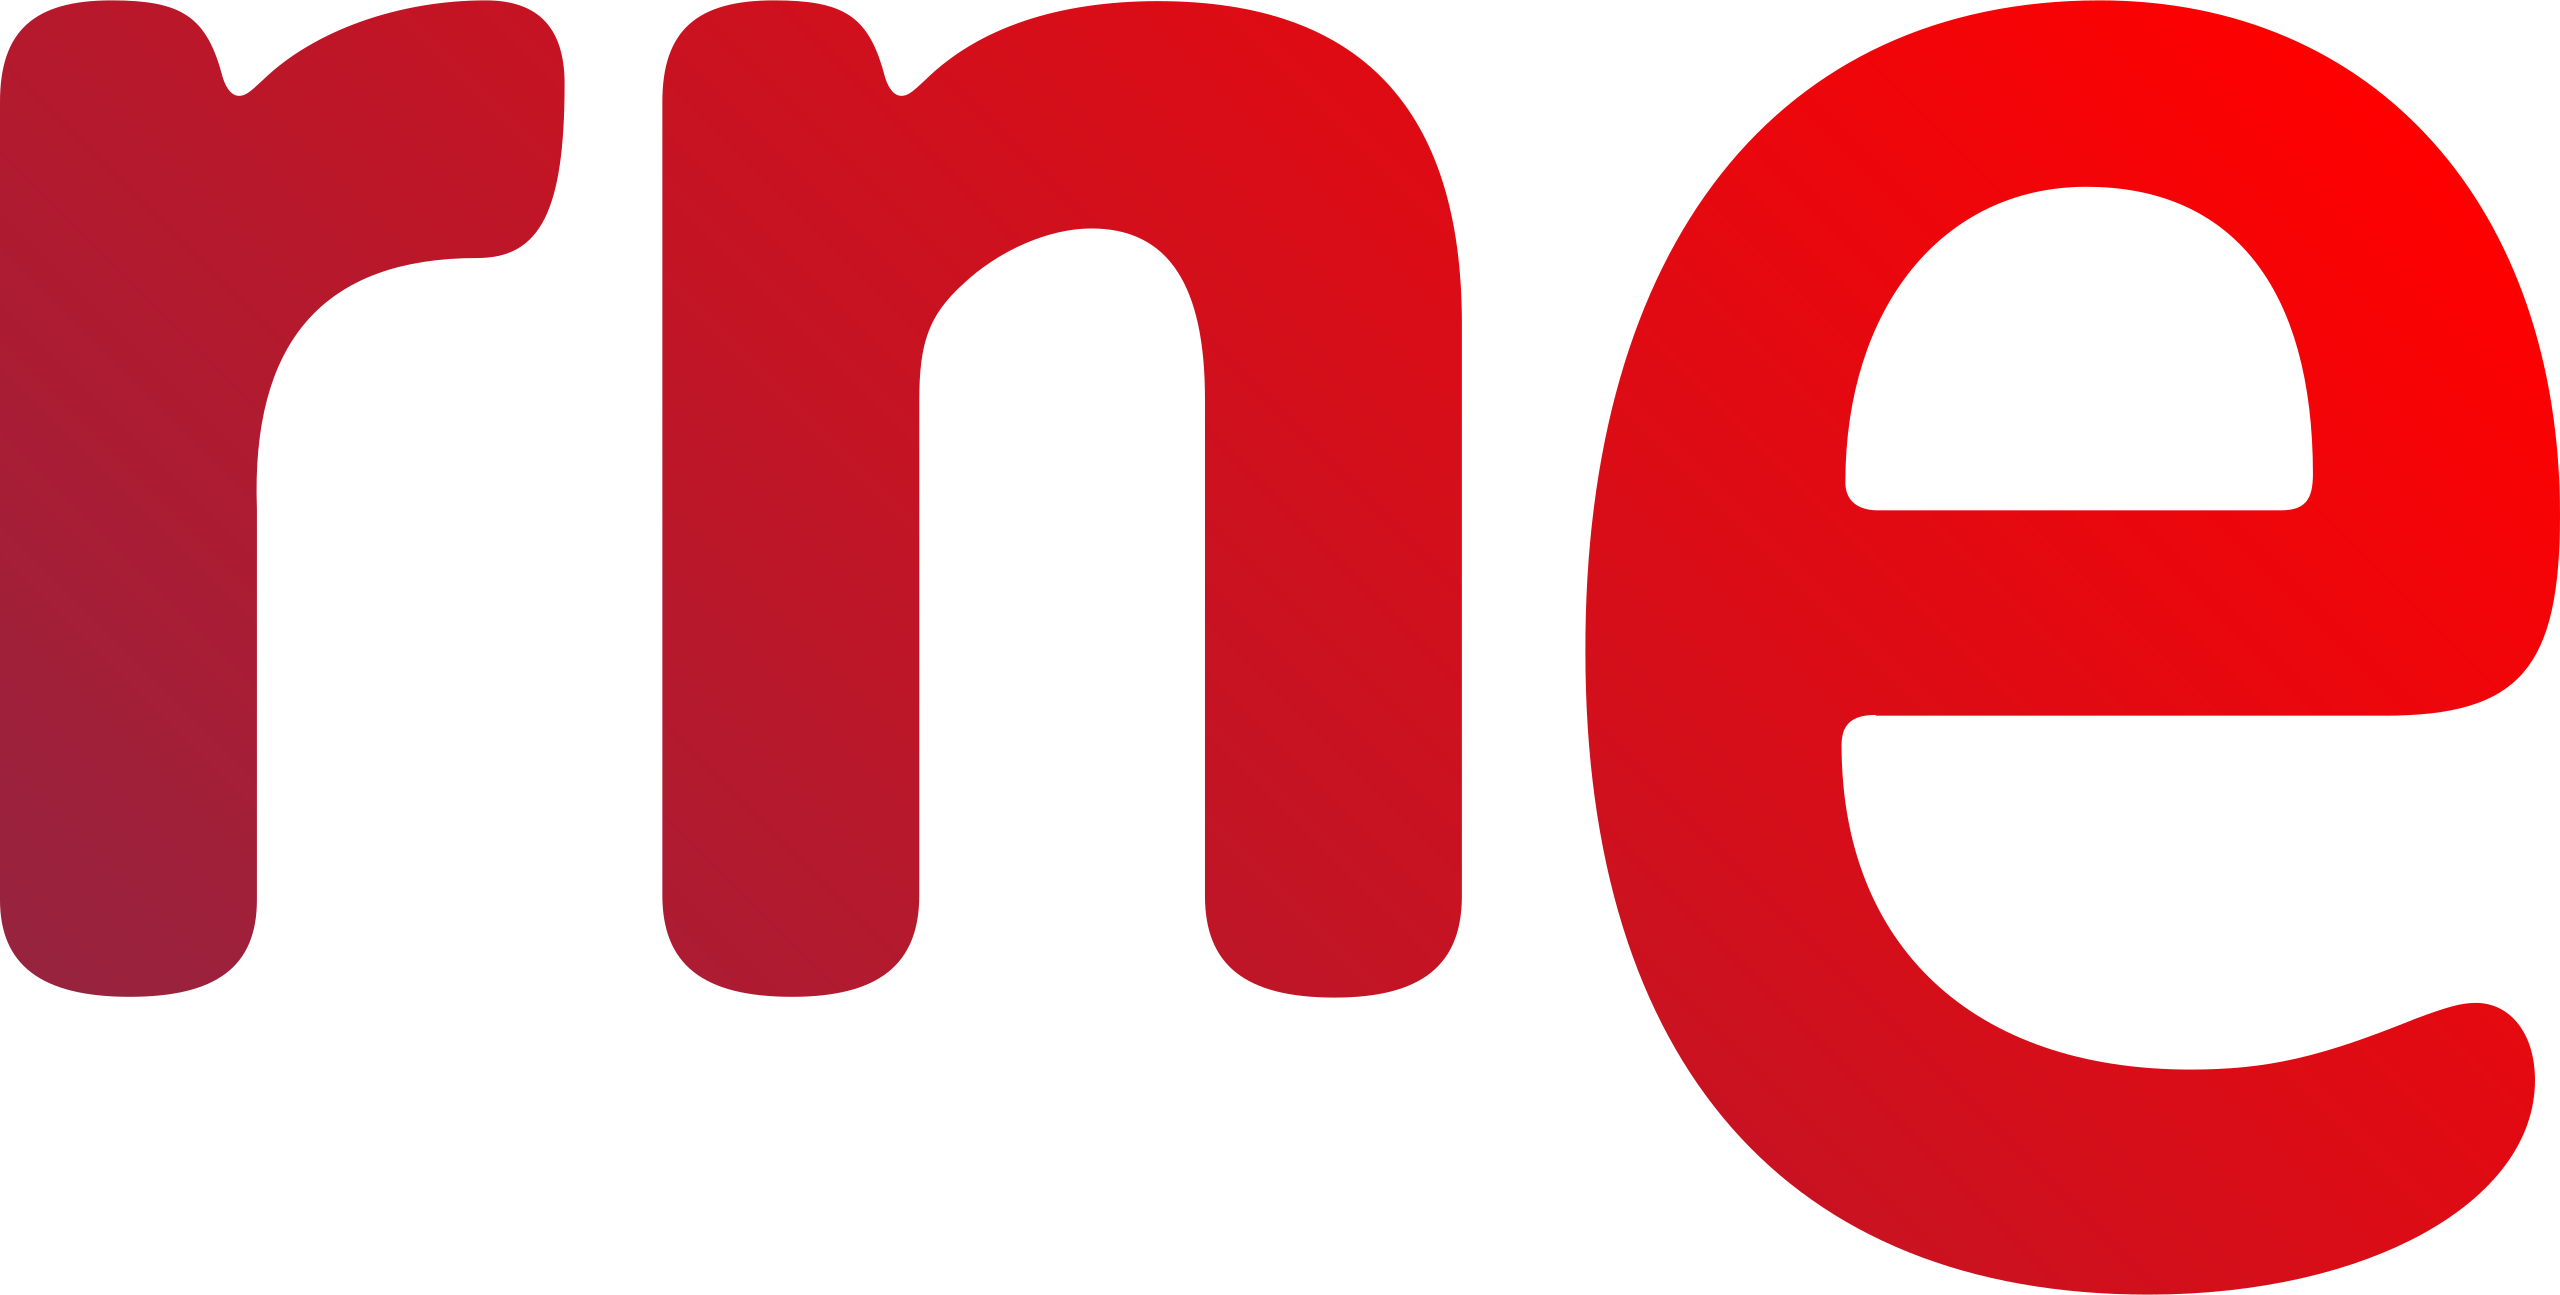 RNE logo